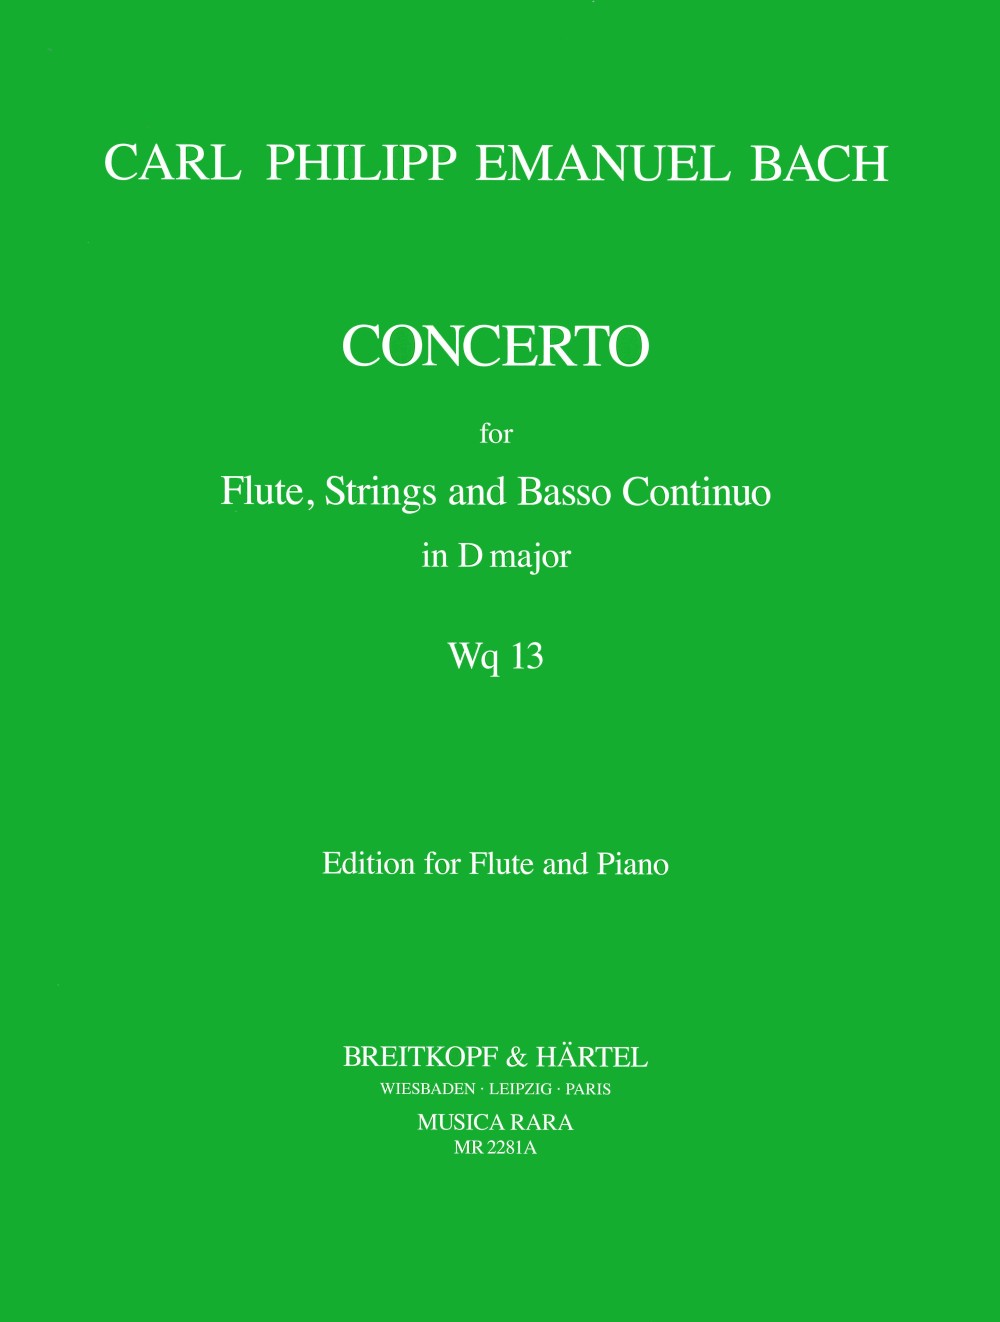 Carl Philipp Emanuel Bach: Flute concerto in D major Wq 13